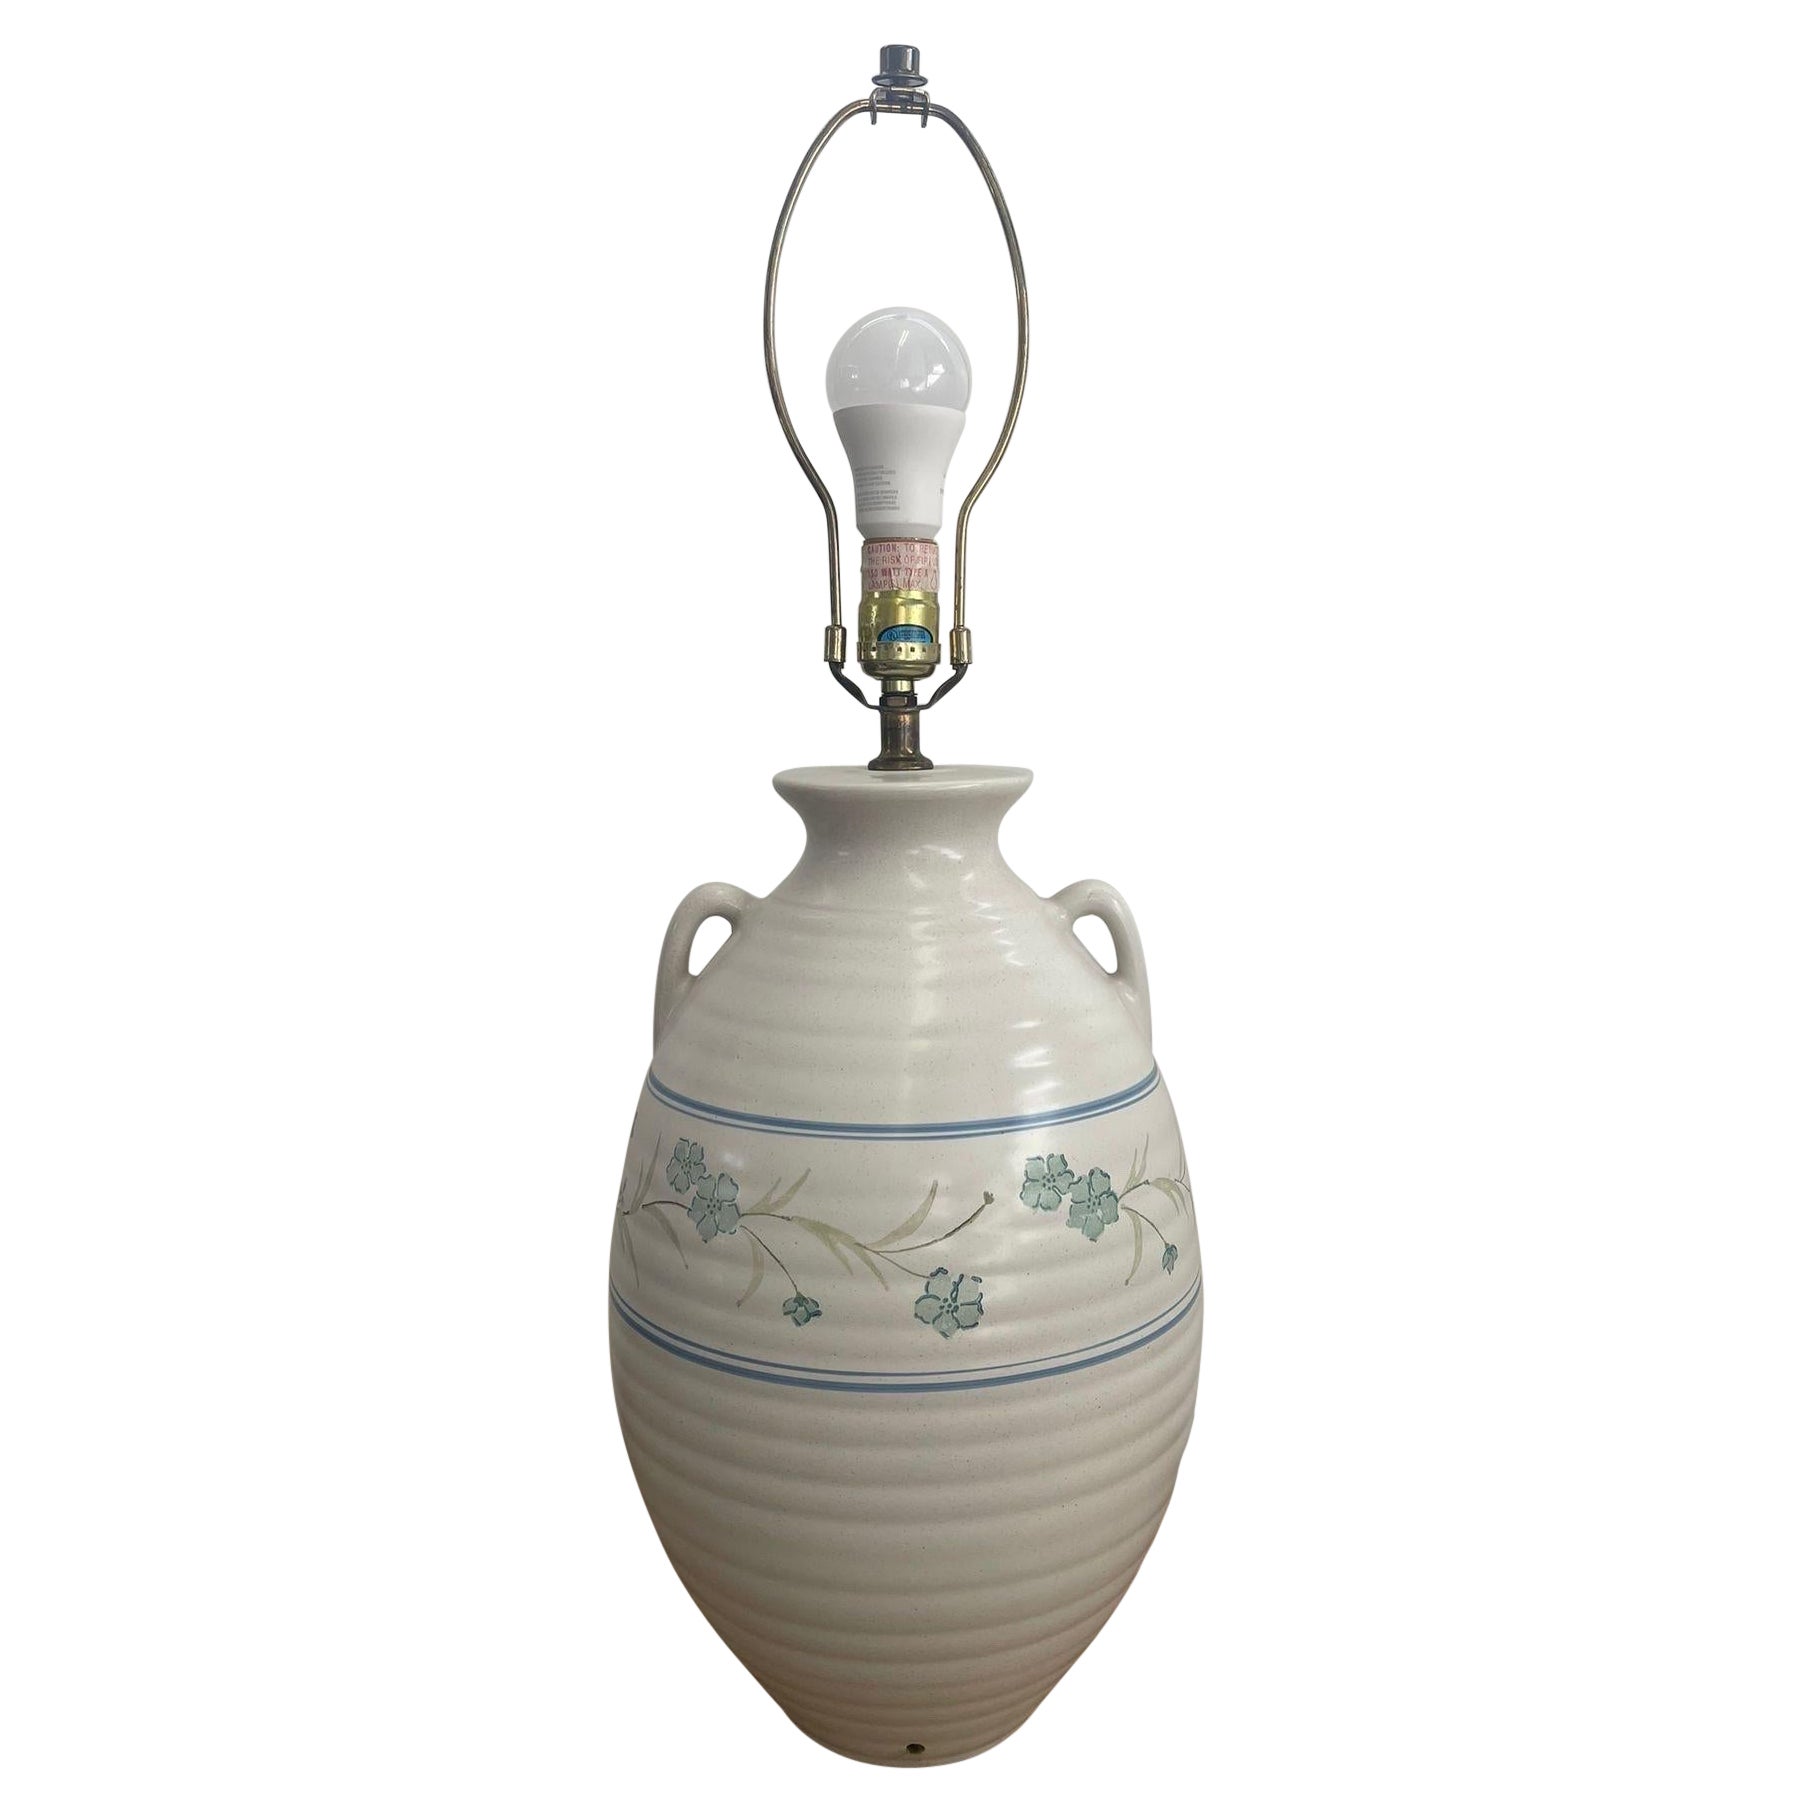 Vintage-Lampe mit Keramikvasensockel und Blumenmotiv aus Keramik.